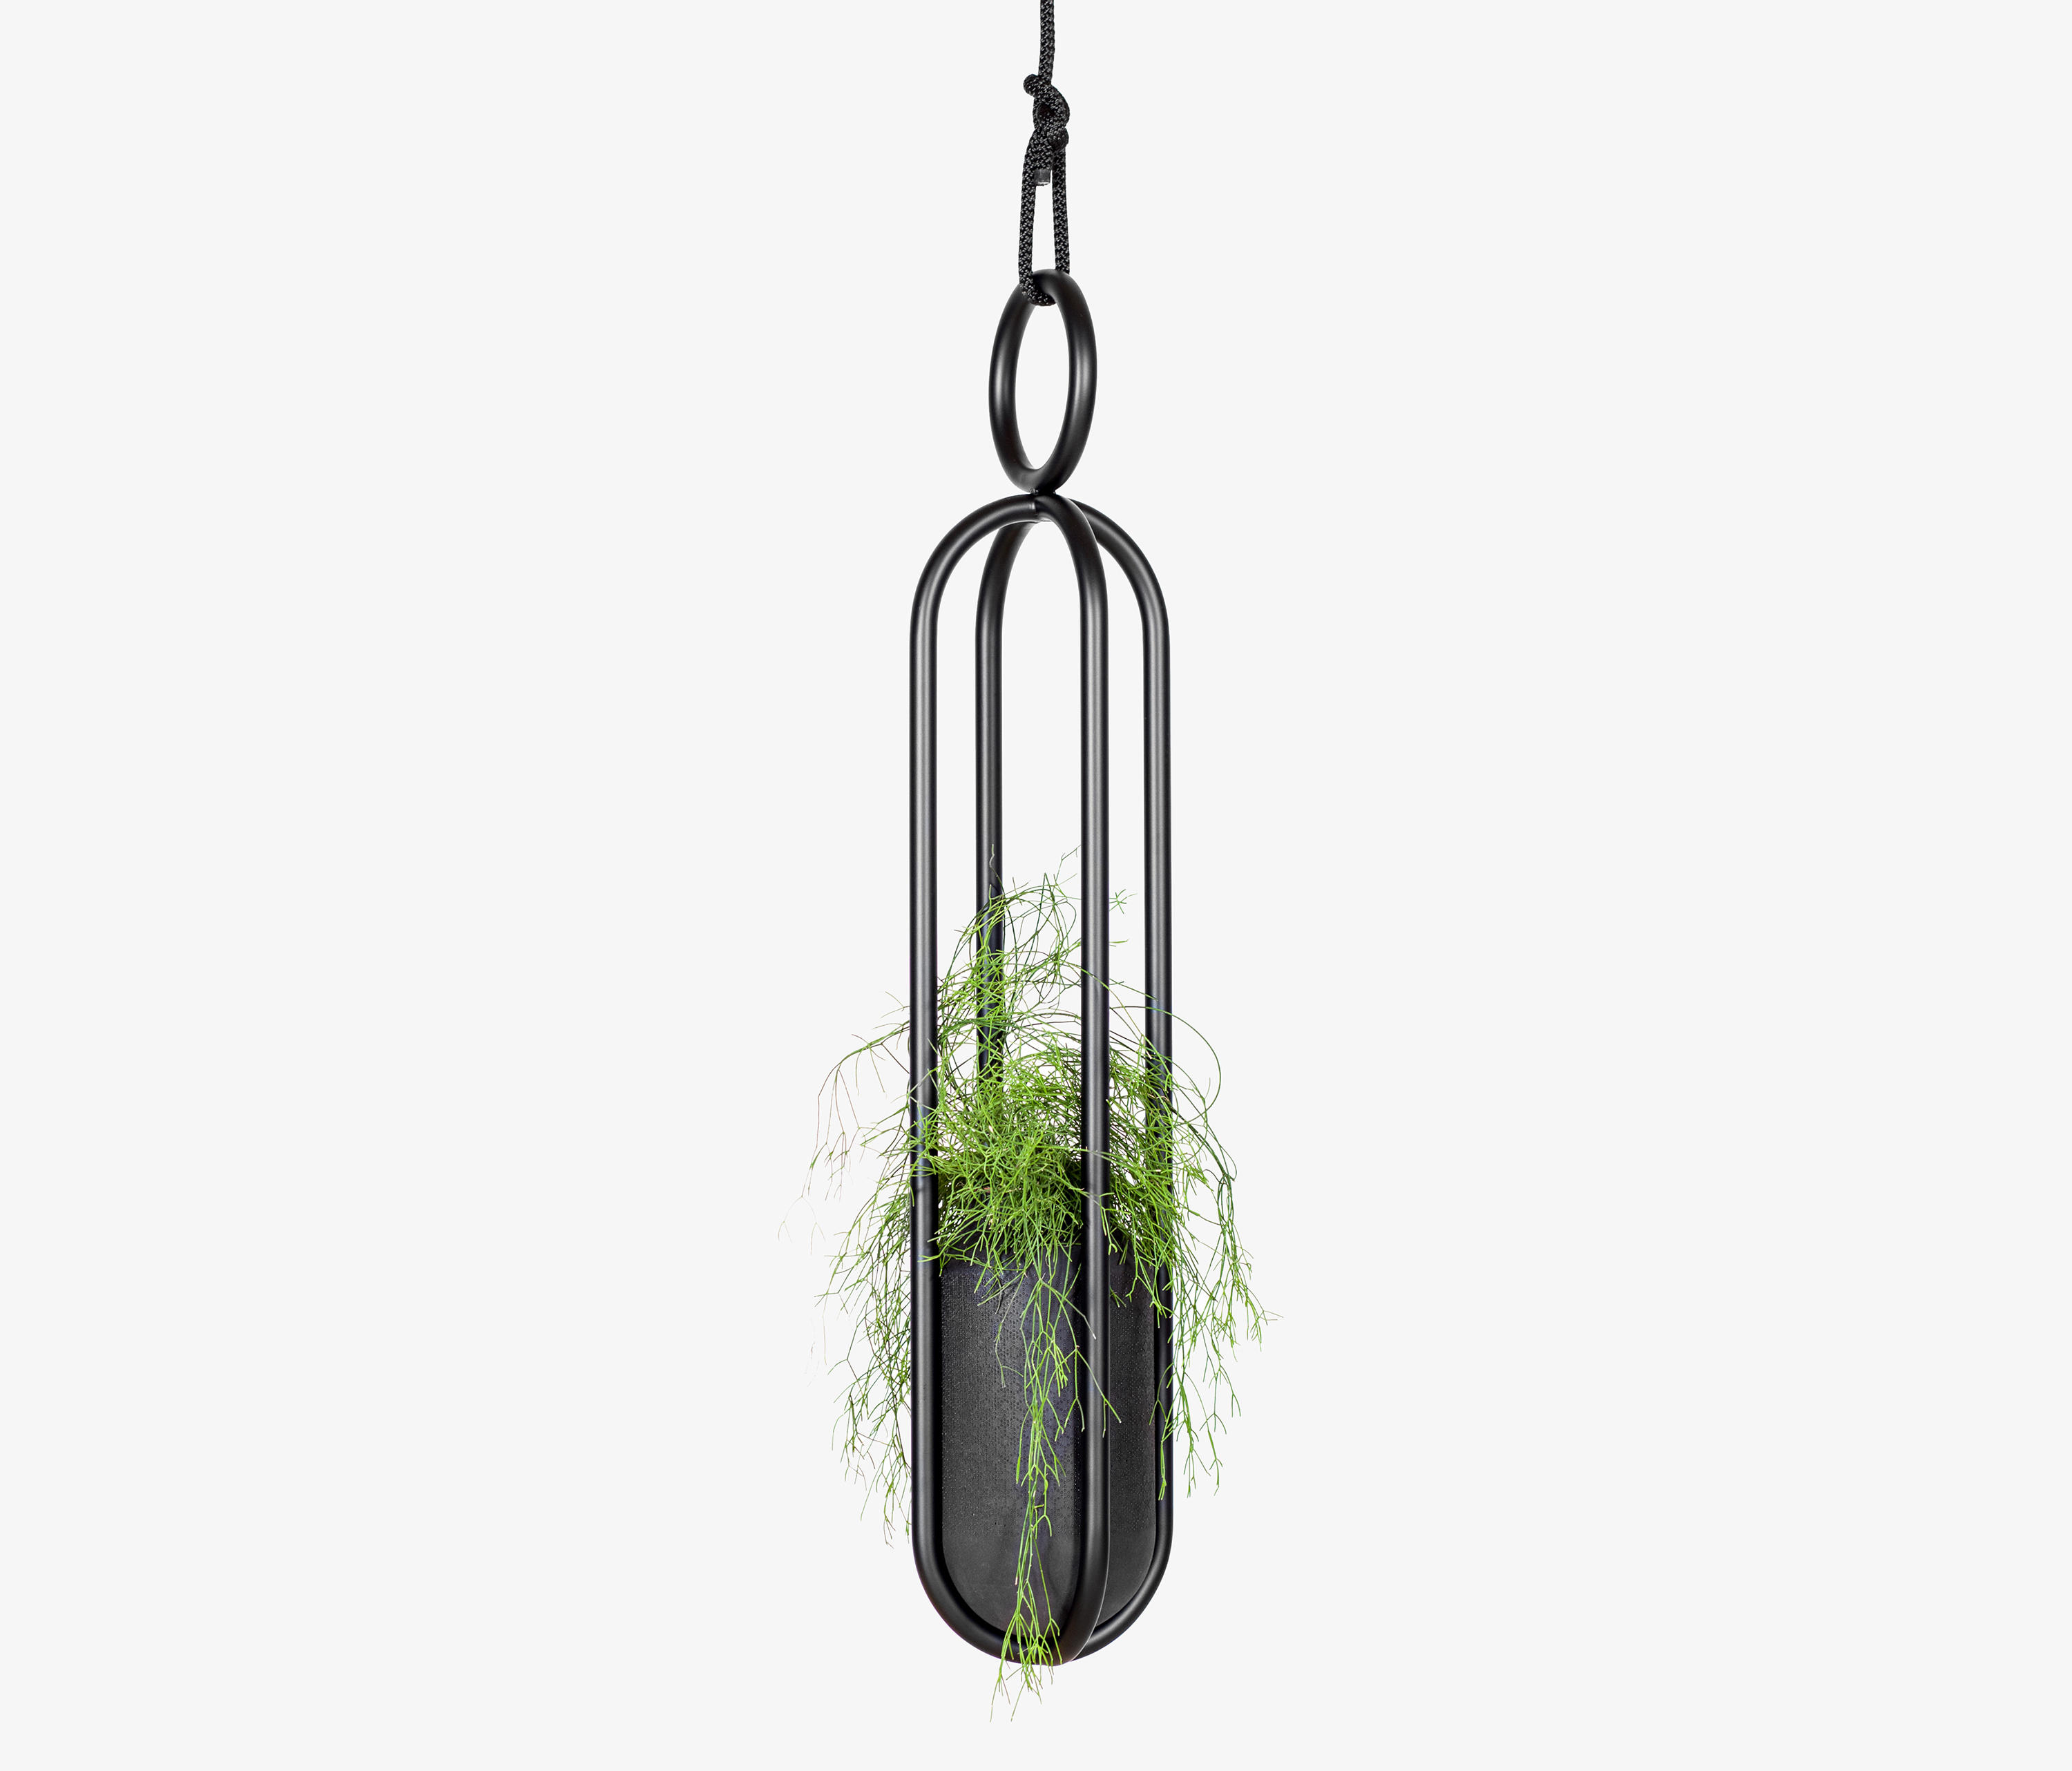 Blumenampel Edition hanging Architonic | object room